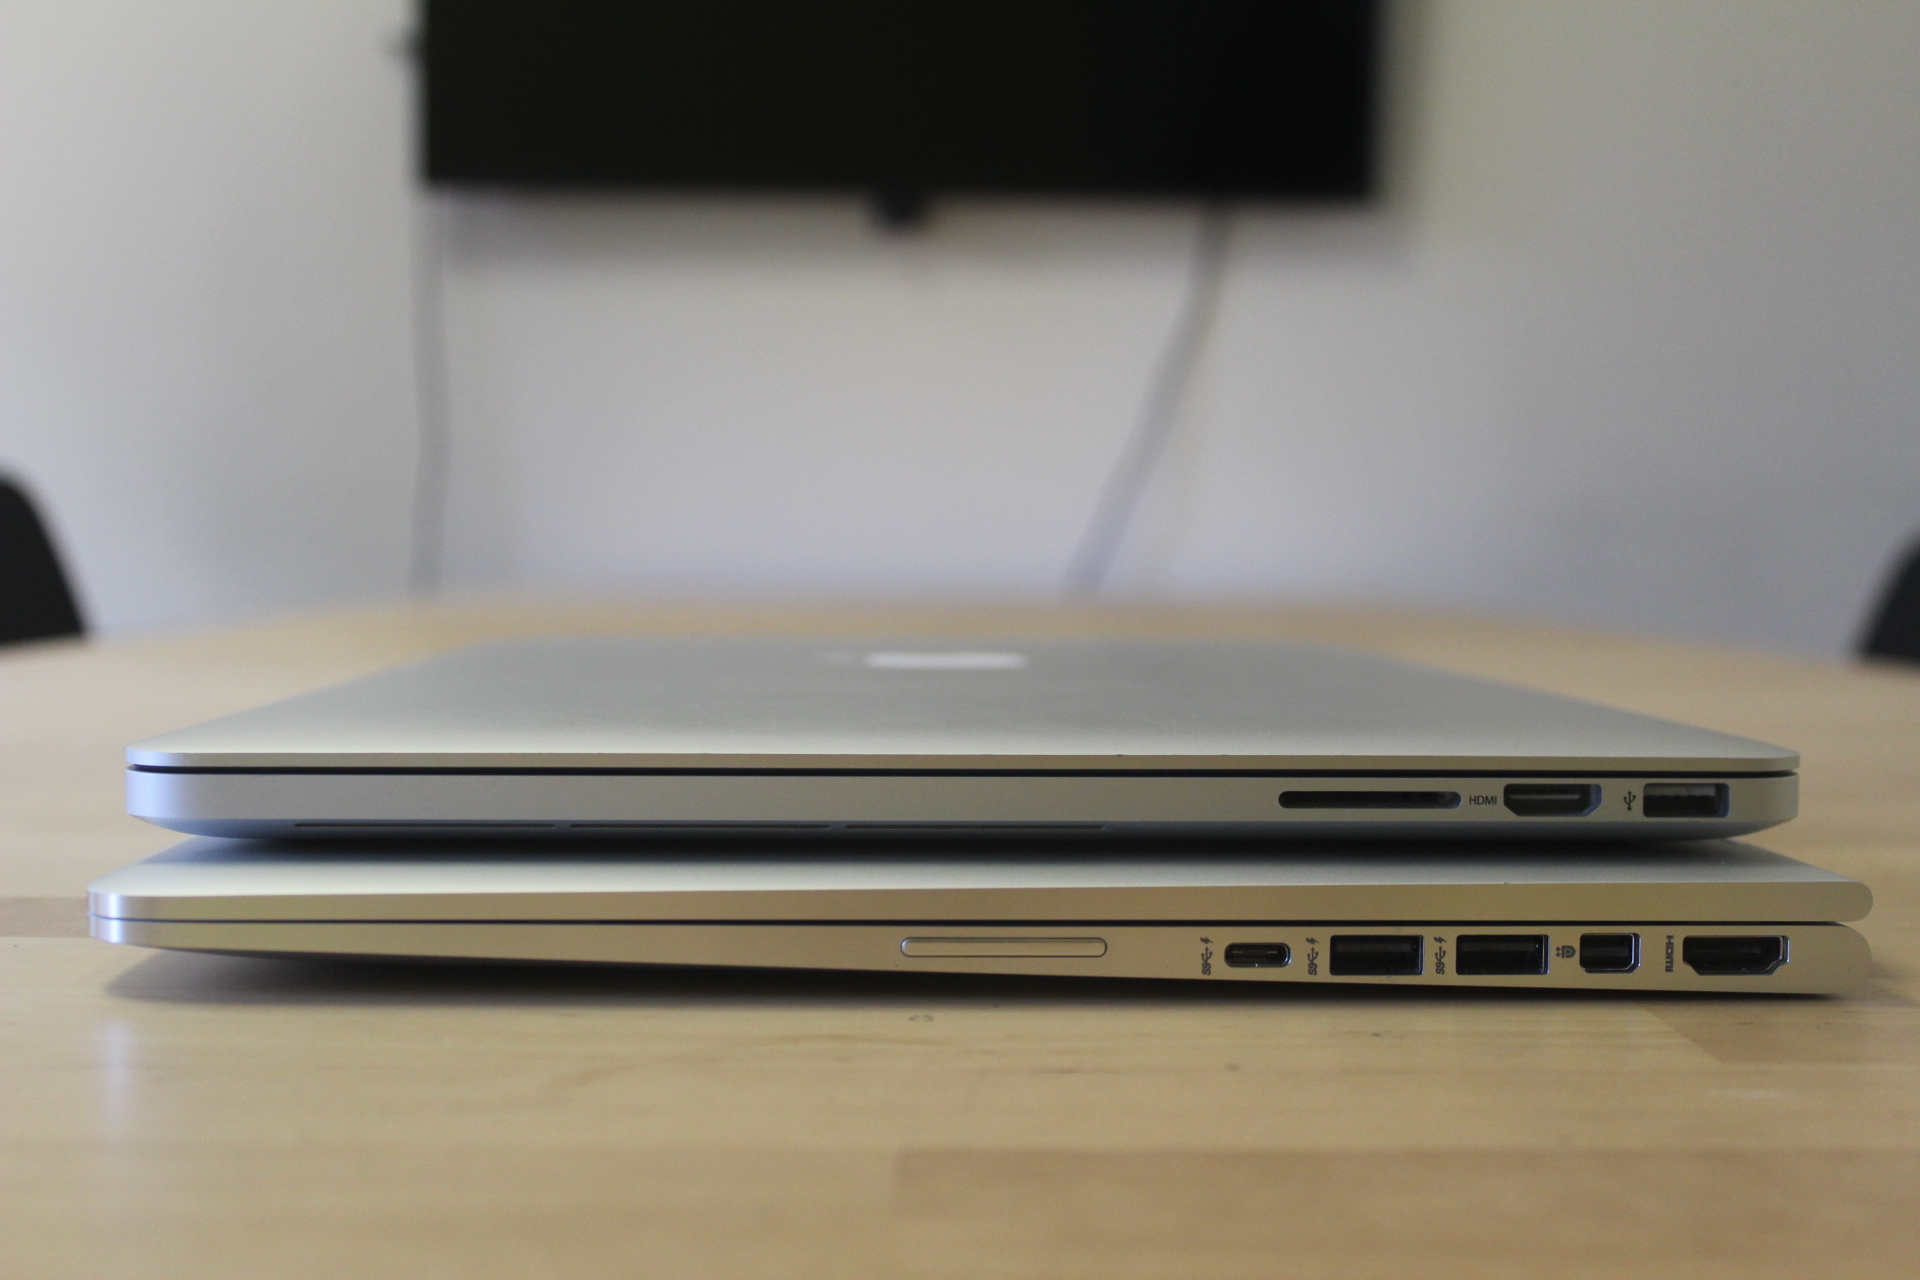 MacBook Pro on top, Spectre x360 on the bottom.